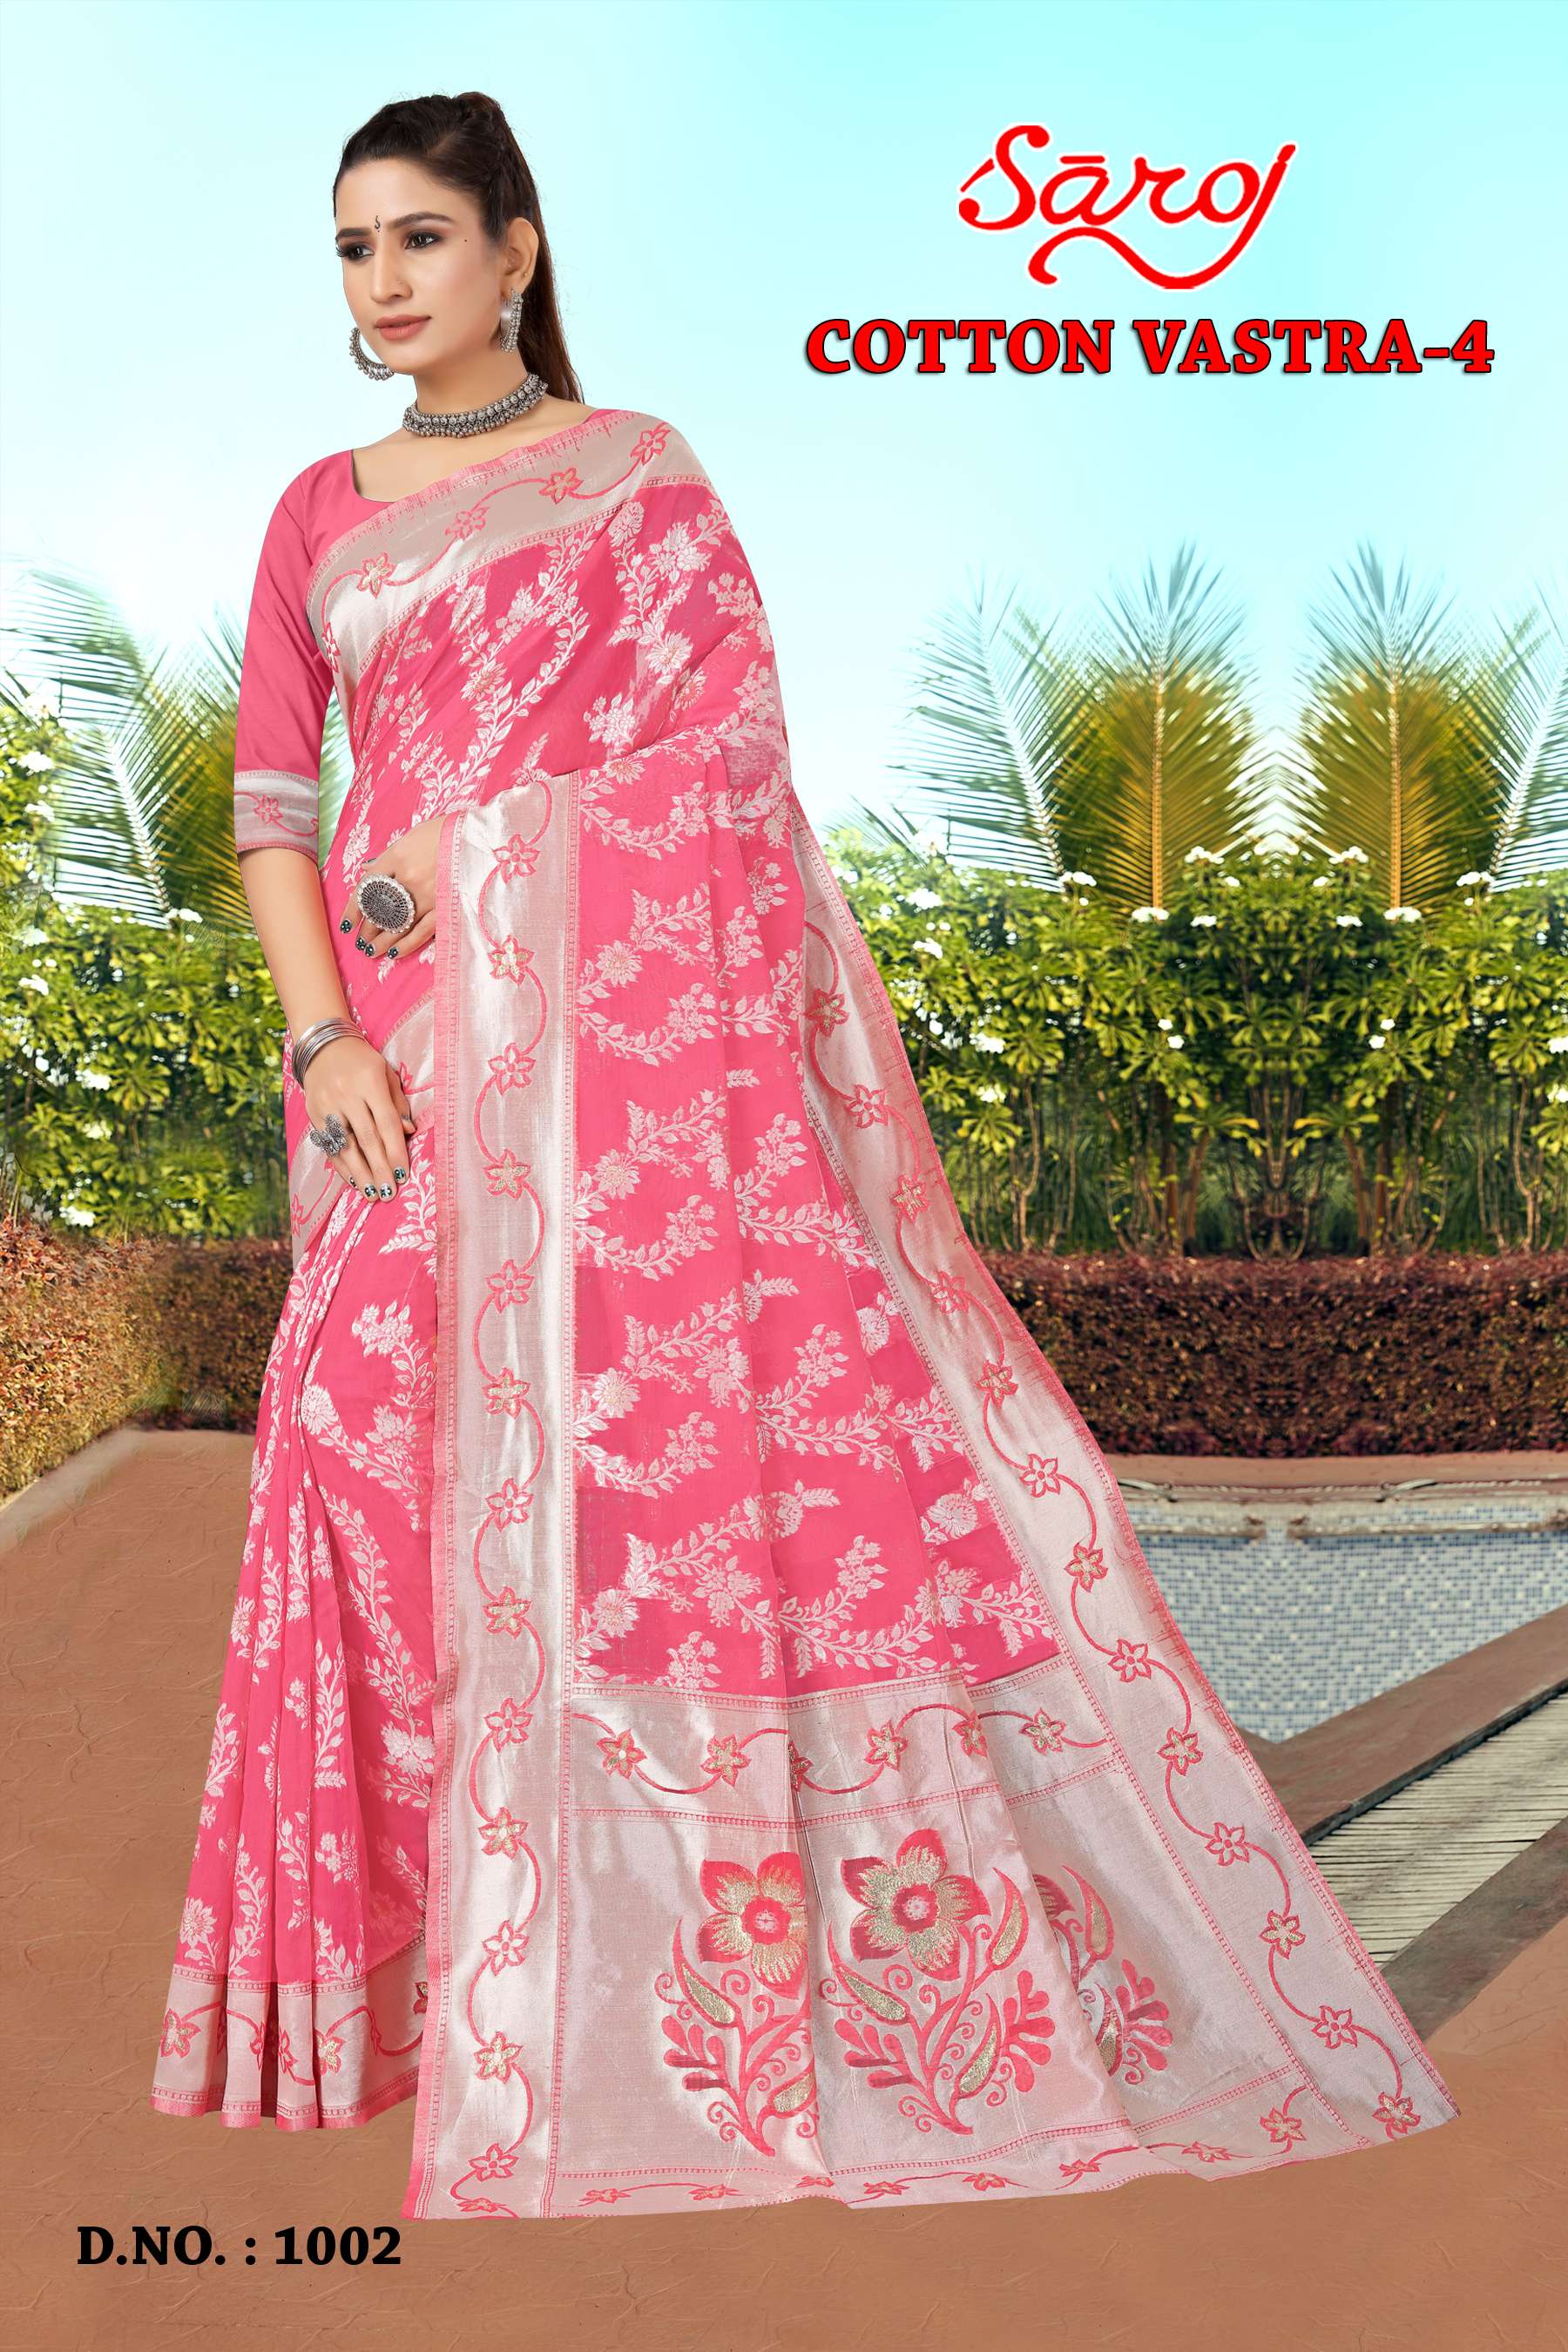 saroj textile presents Cotton vastra vol 4 banarasi sarees catalogue